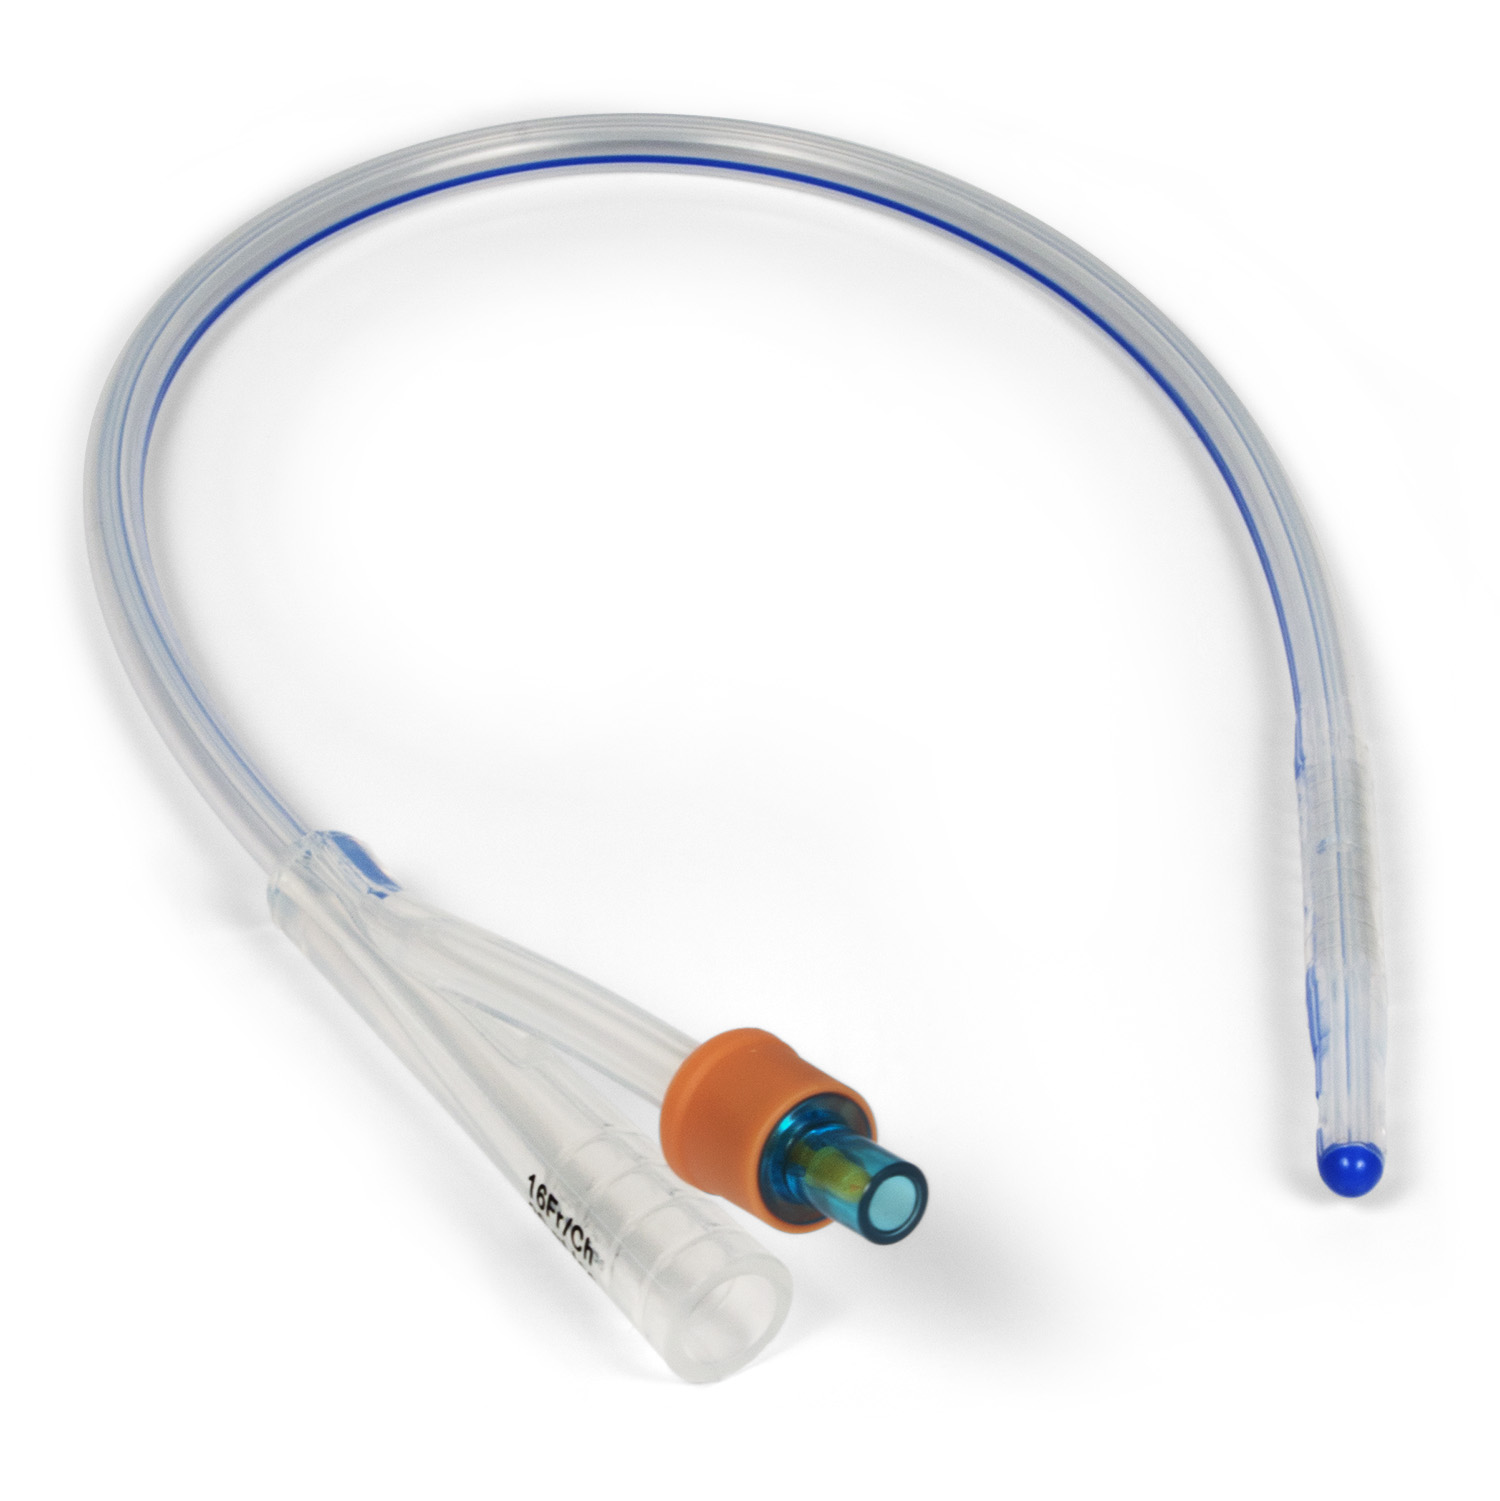 Silicone Foley Catheters 2-way Standard - 12FR / 5-10cc